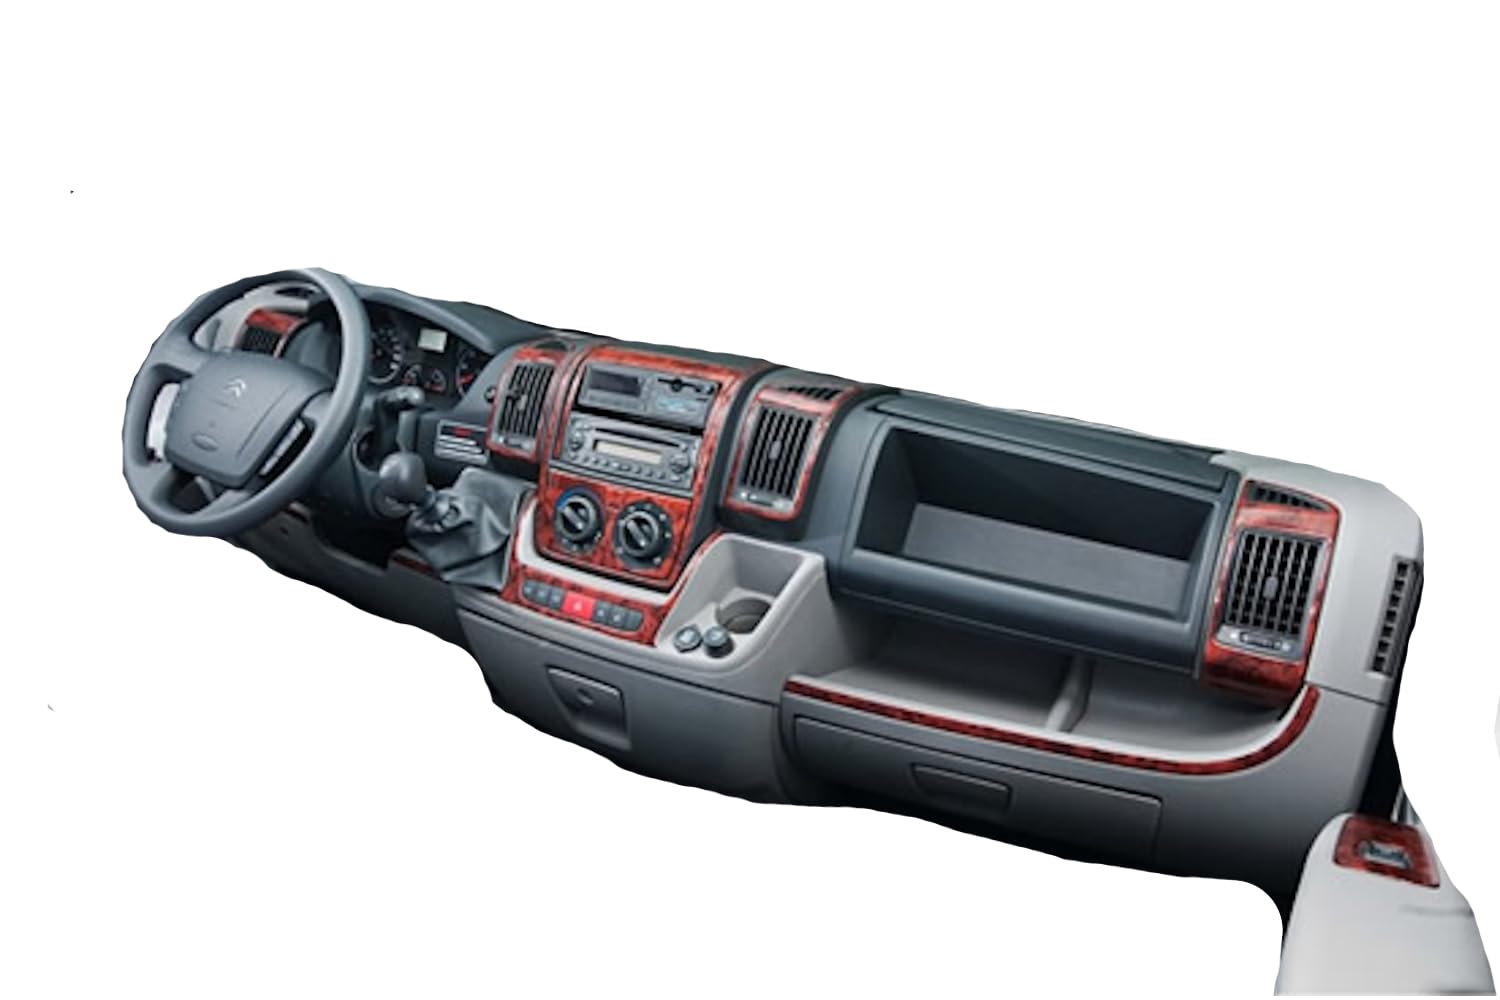 AUTOKLEIDUNG® Cockpit Dekor kompatibel mit Fiat Ducato ab Baujahr 02/2006 22 Teile | 3D Walnuss Optik von Autokleidung